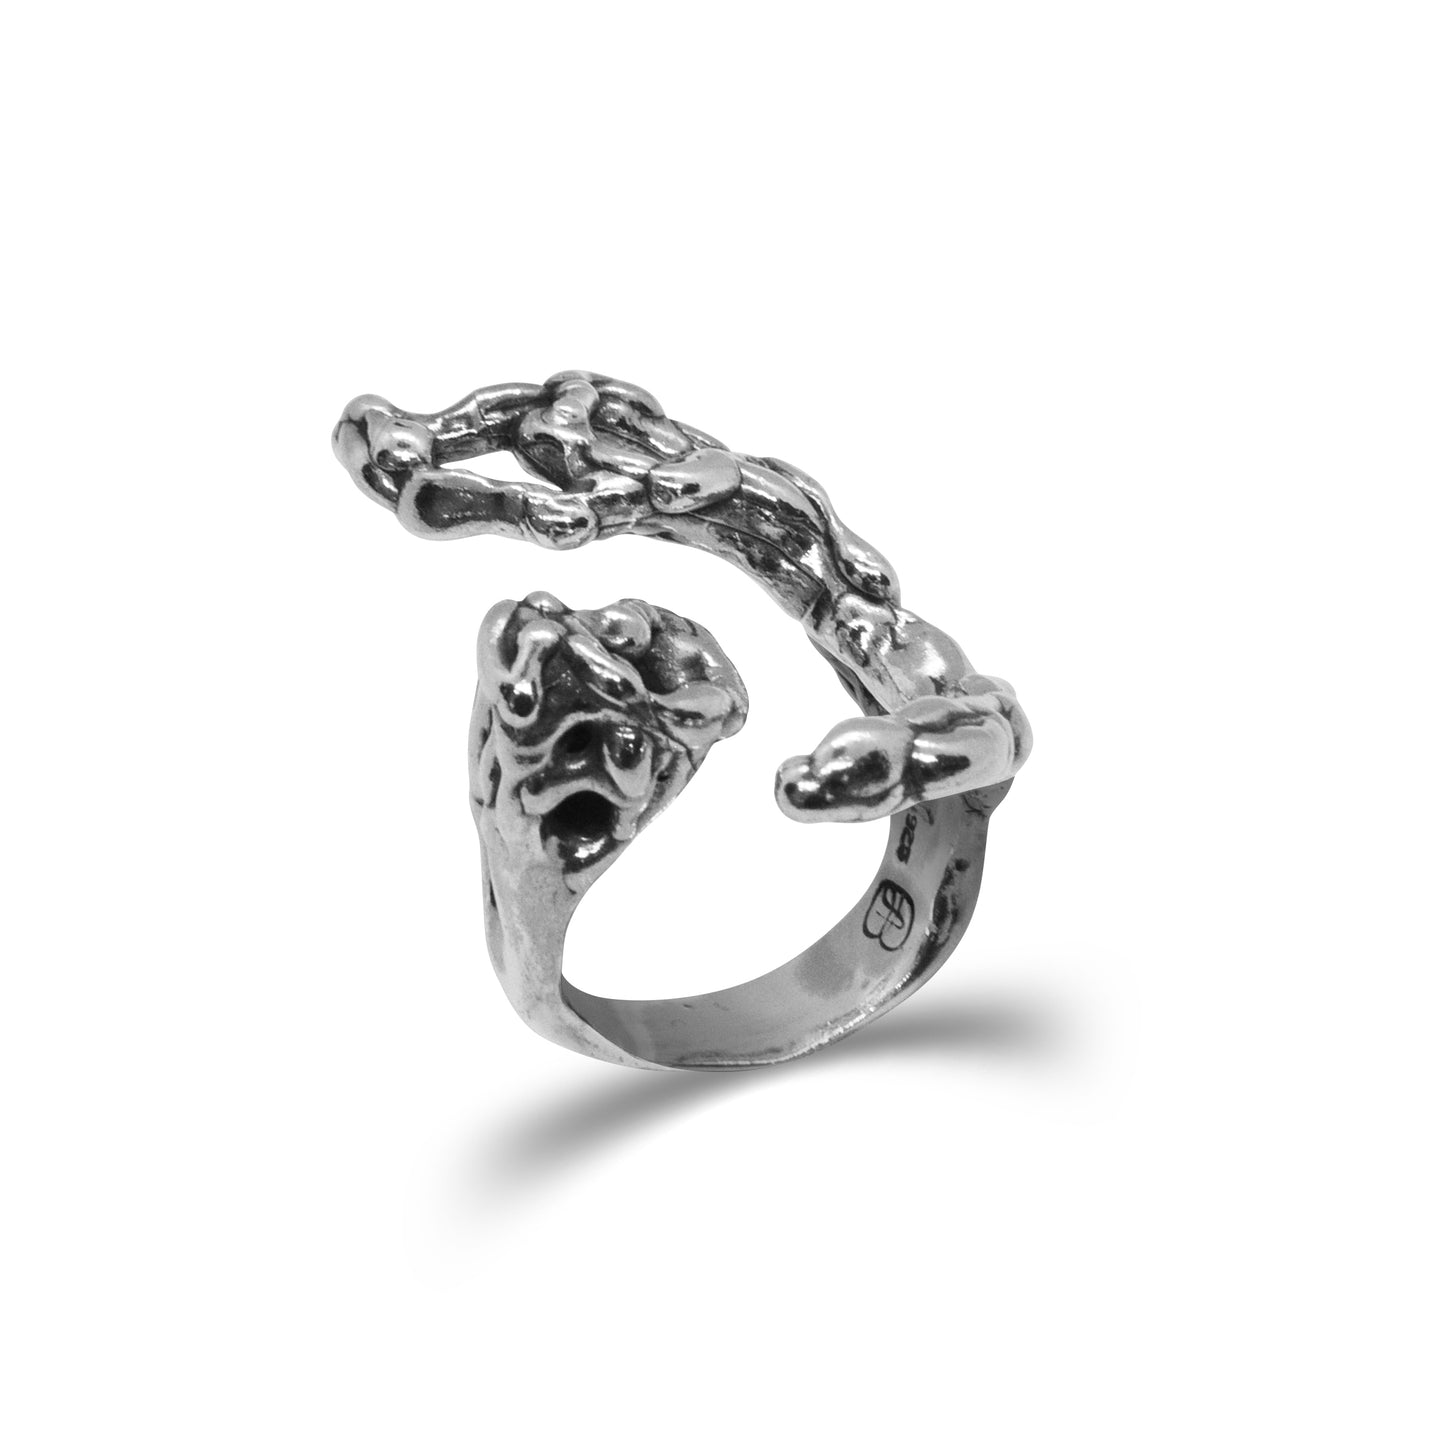 Crescent Ring - Spiritual Ring - Free Form Ring - Art Nouveau -Designer Jewelry - Organic Shape Ring - Sterling Silver Ring - Positive Ring - Inspiring Ring - Moon Ring